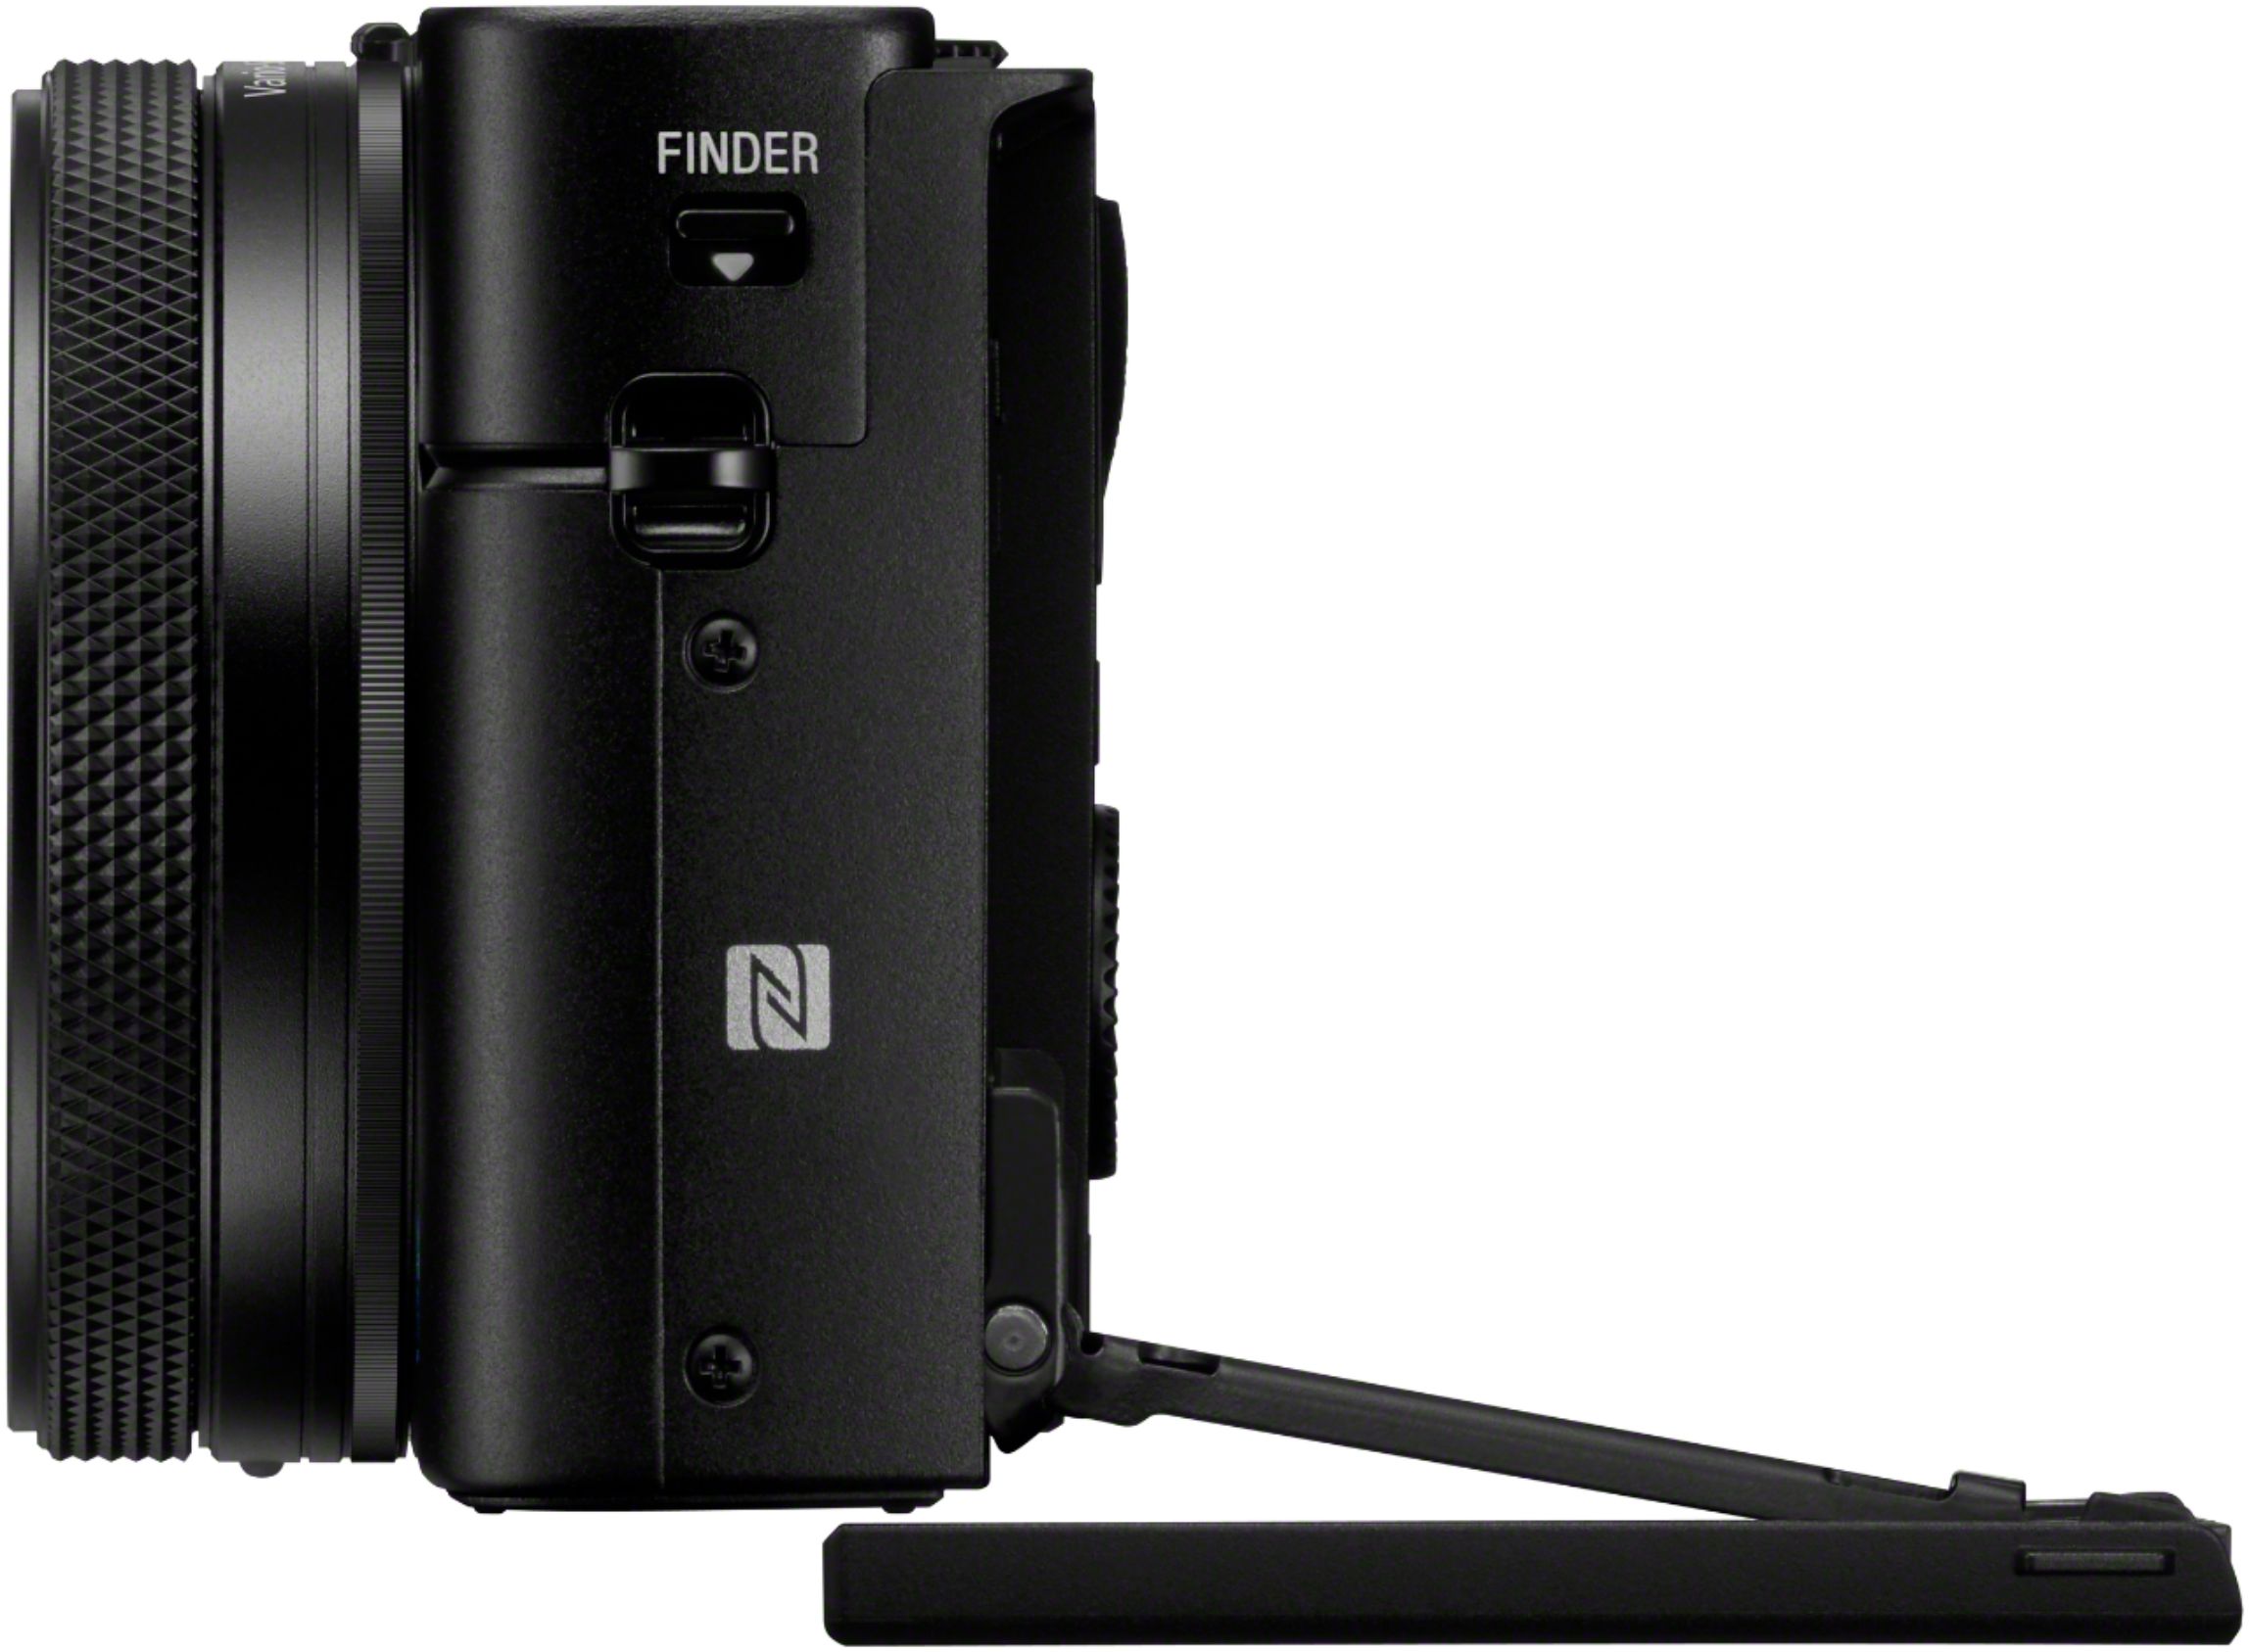 Sony Cyber-shot RX100 VII 20.1-Megapixel Digital Camera Black 